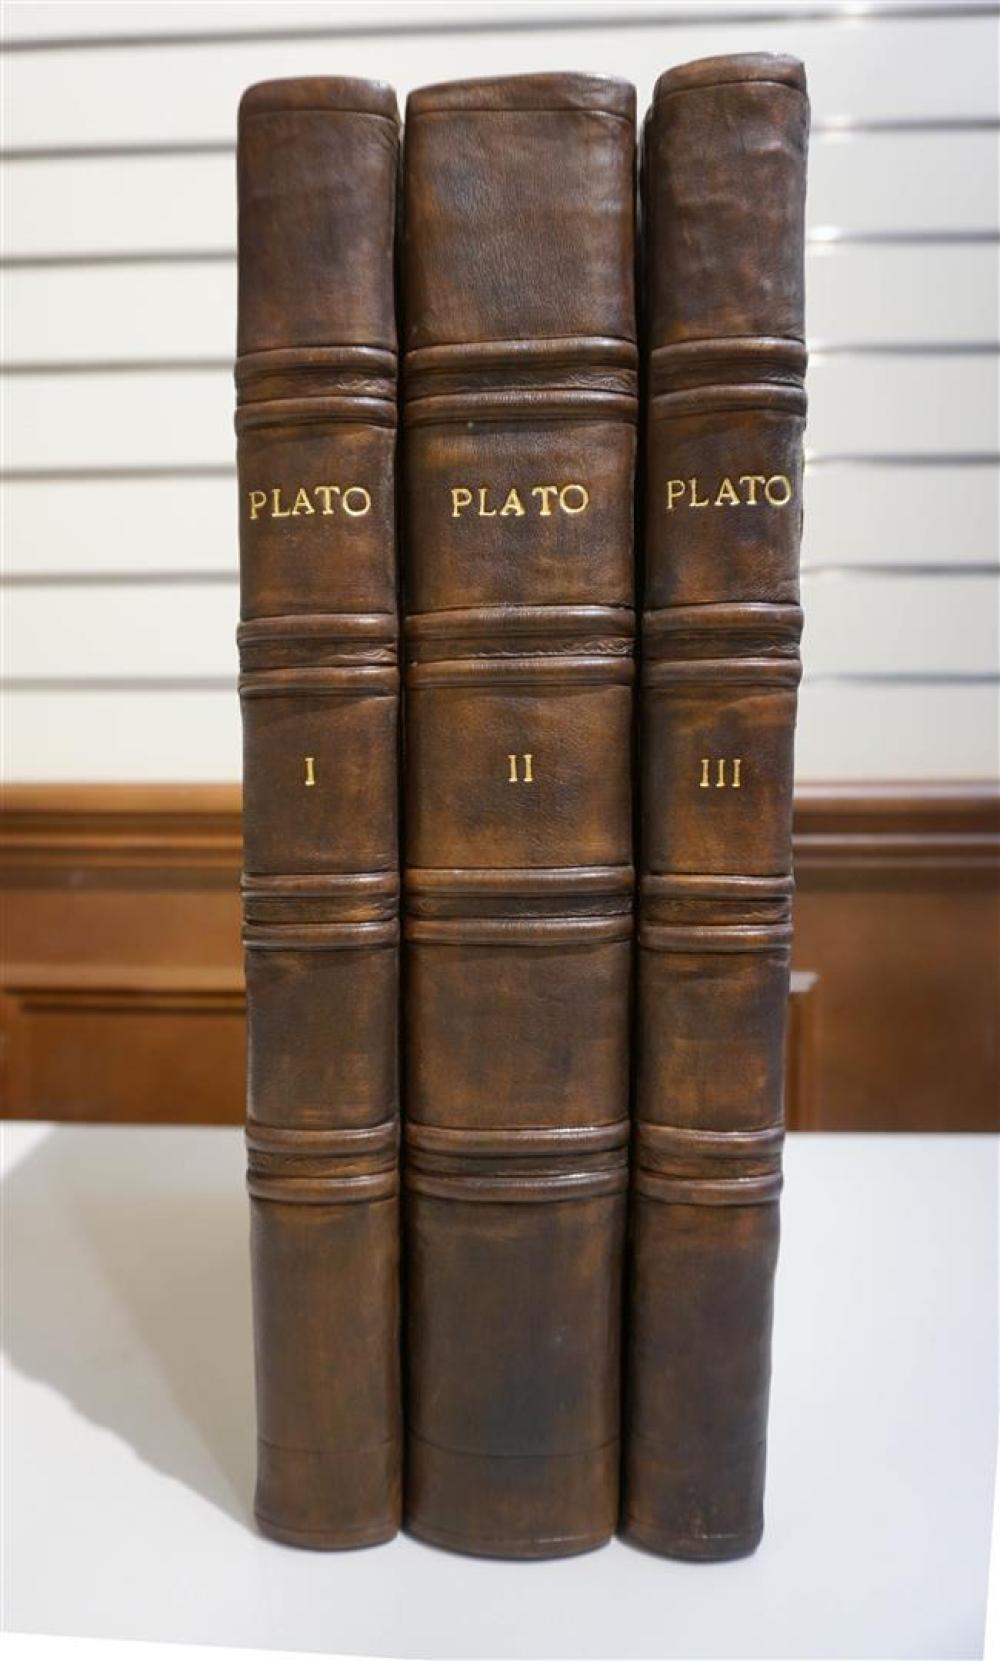 'PLATO', THREE VOLUMES'Plato',